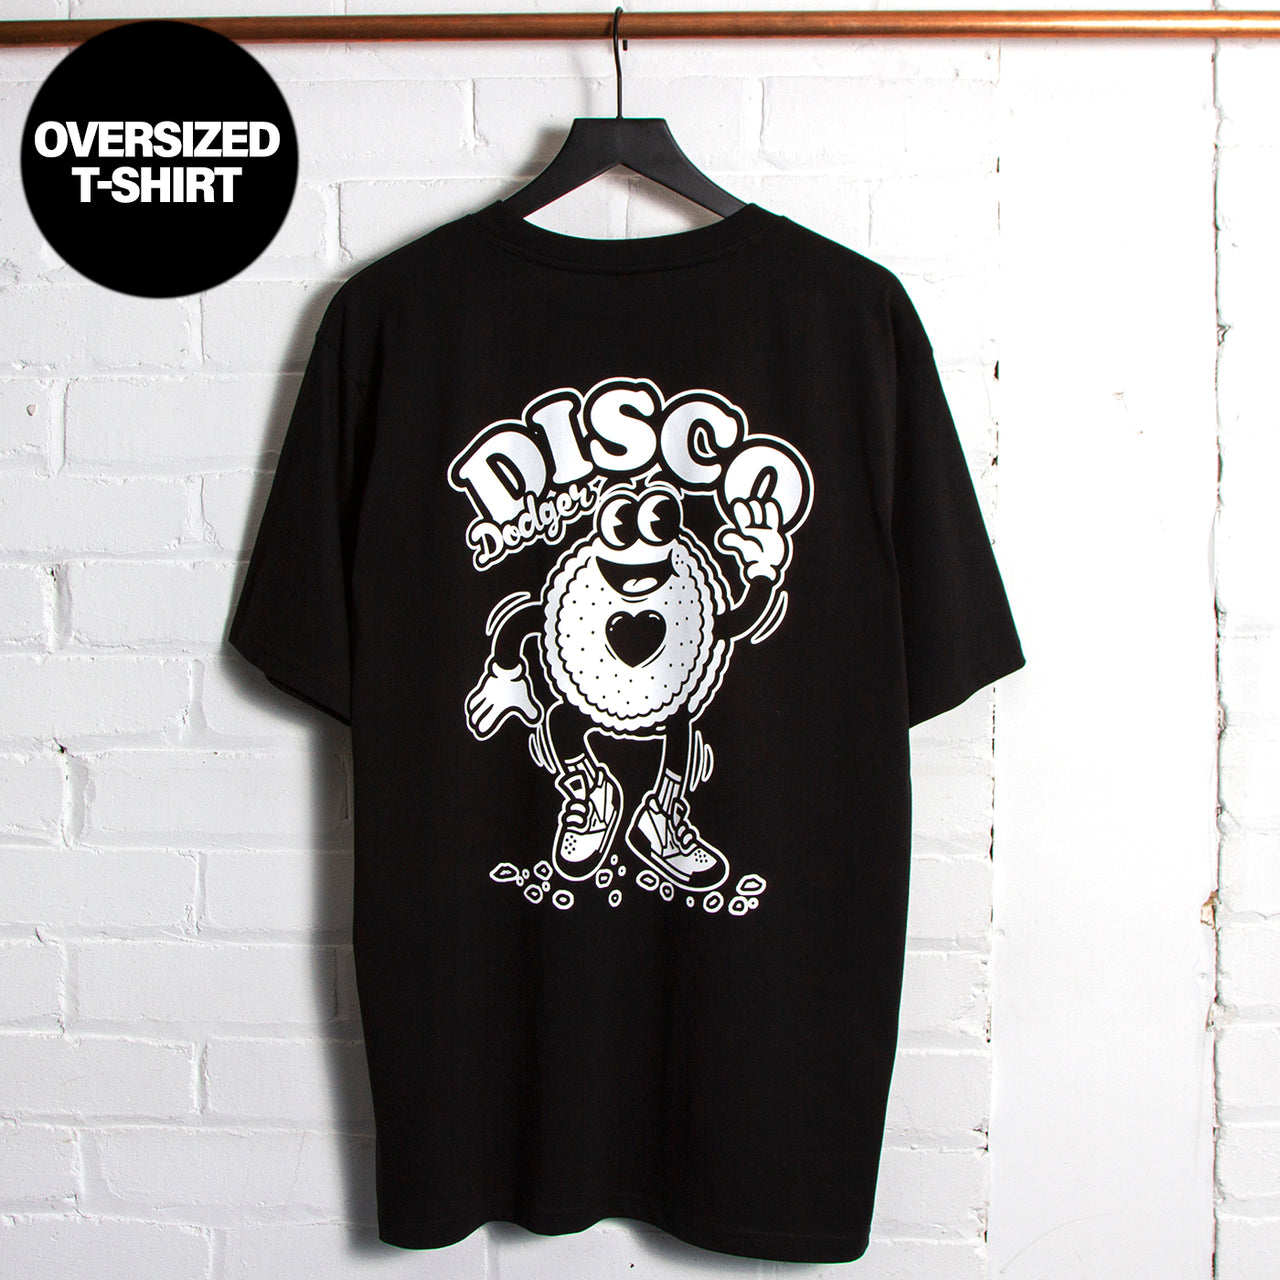 Disco Dodger - Oversized Tshirt - Black